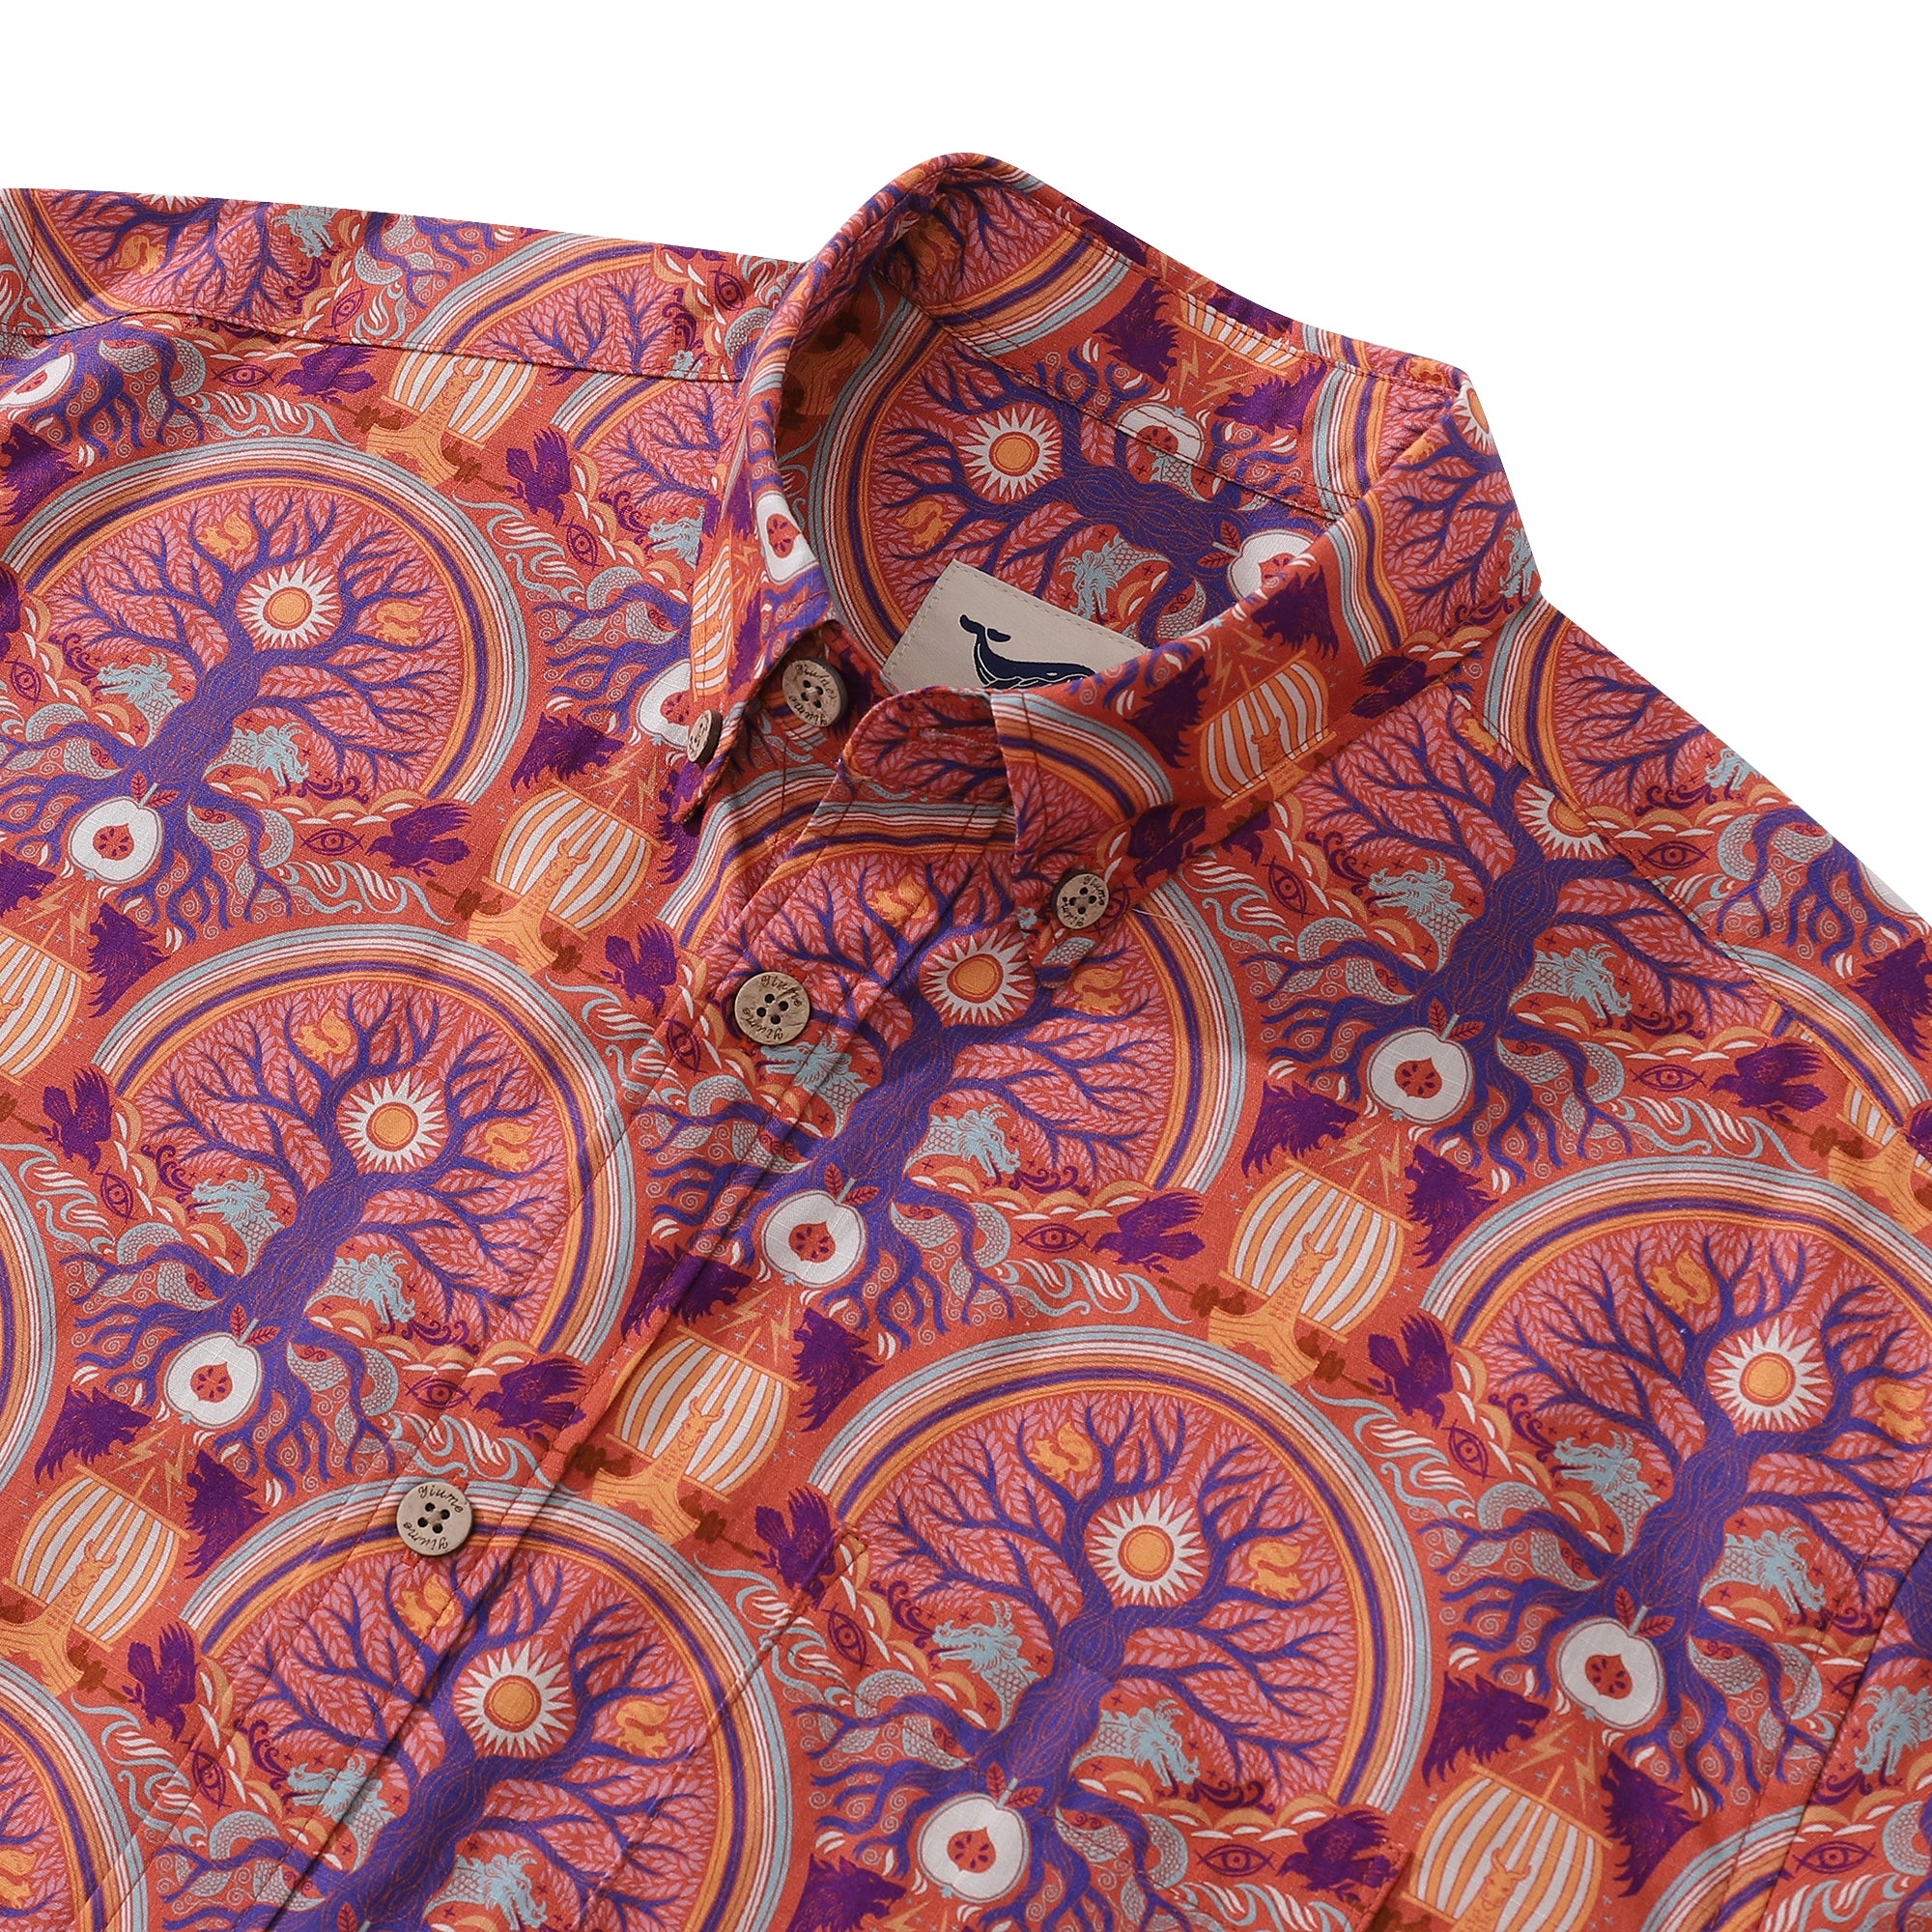 Men's Hawaiian Shirt Yggdrasil By Rebecca Elfast Cotton Button-down Short Sleeve Aloha Shirt